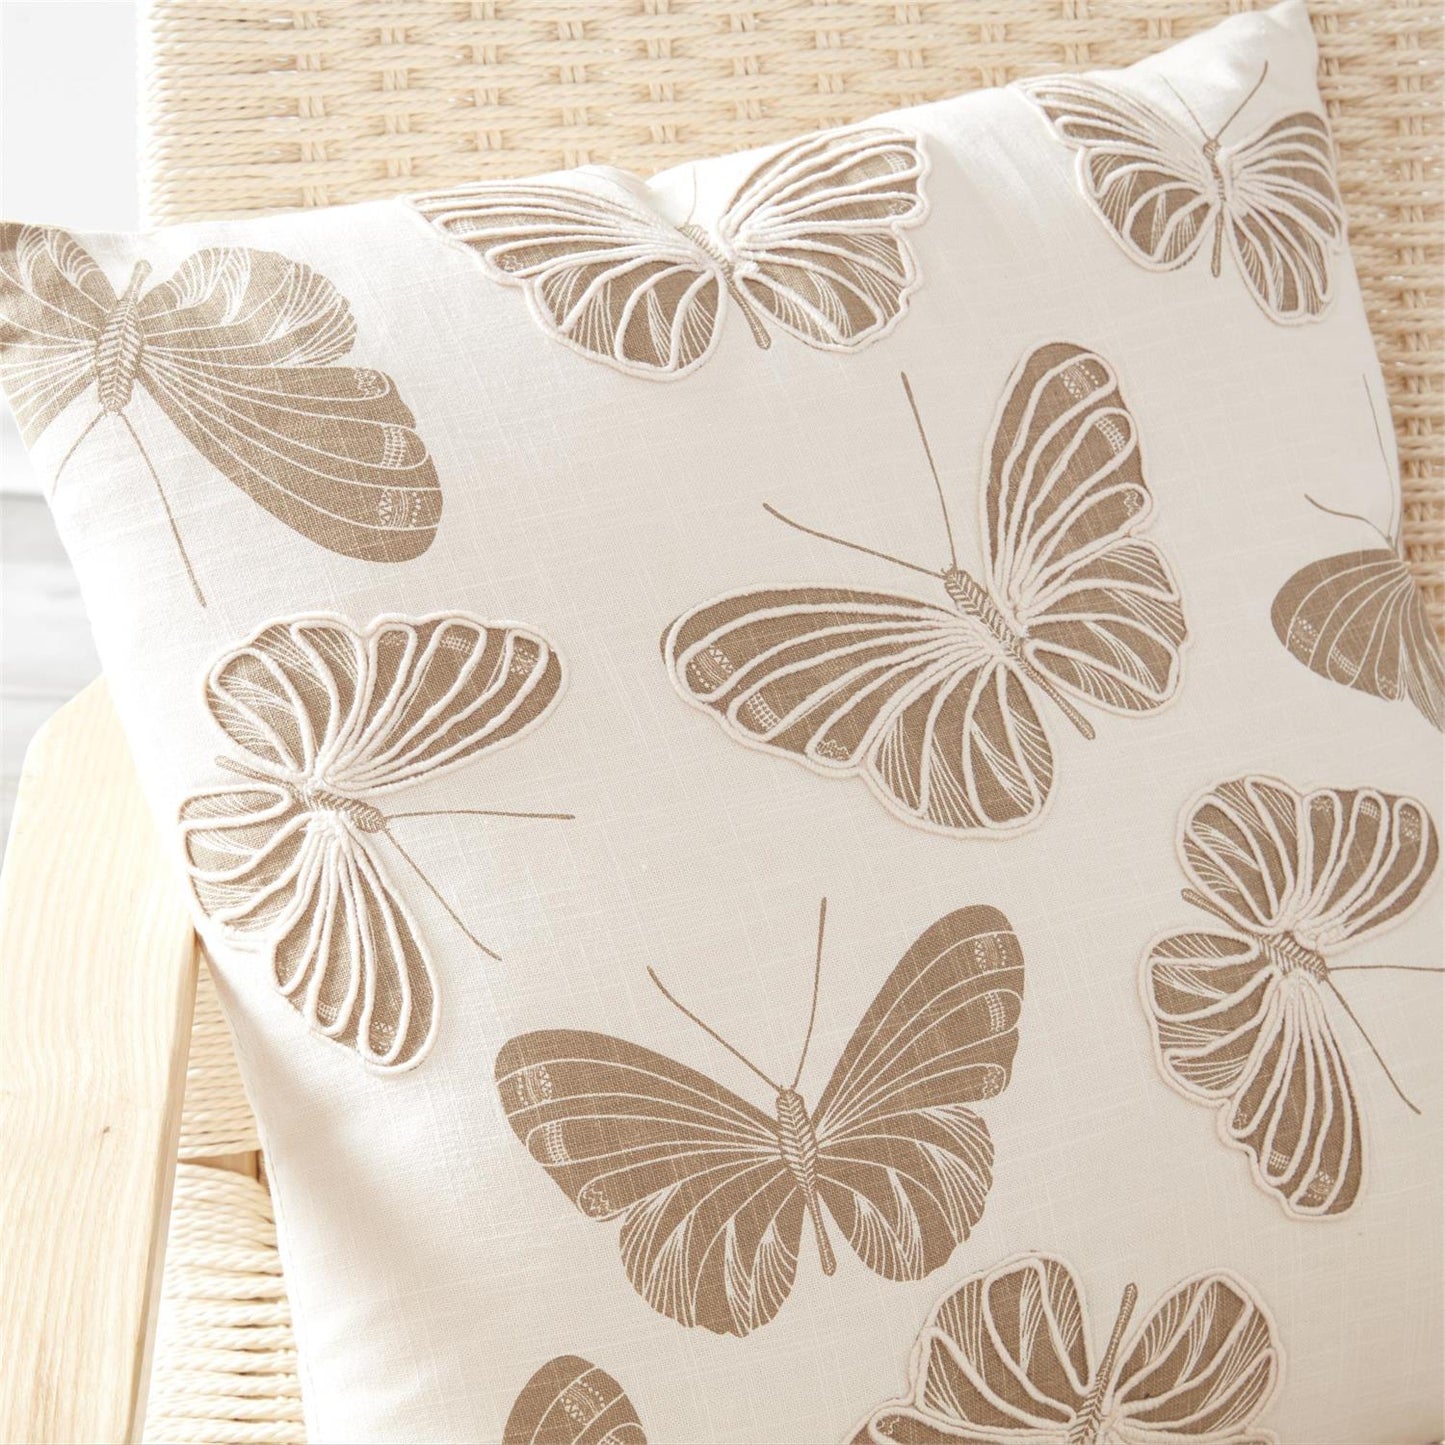 20" Square Cream Pillow w/Tan Butterflies